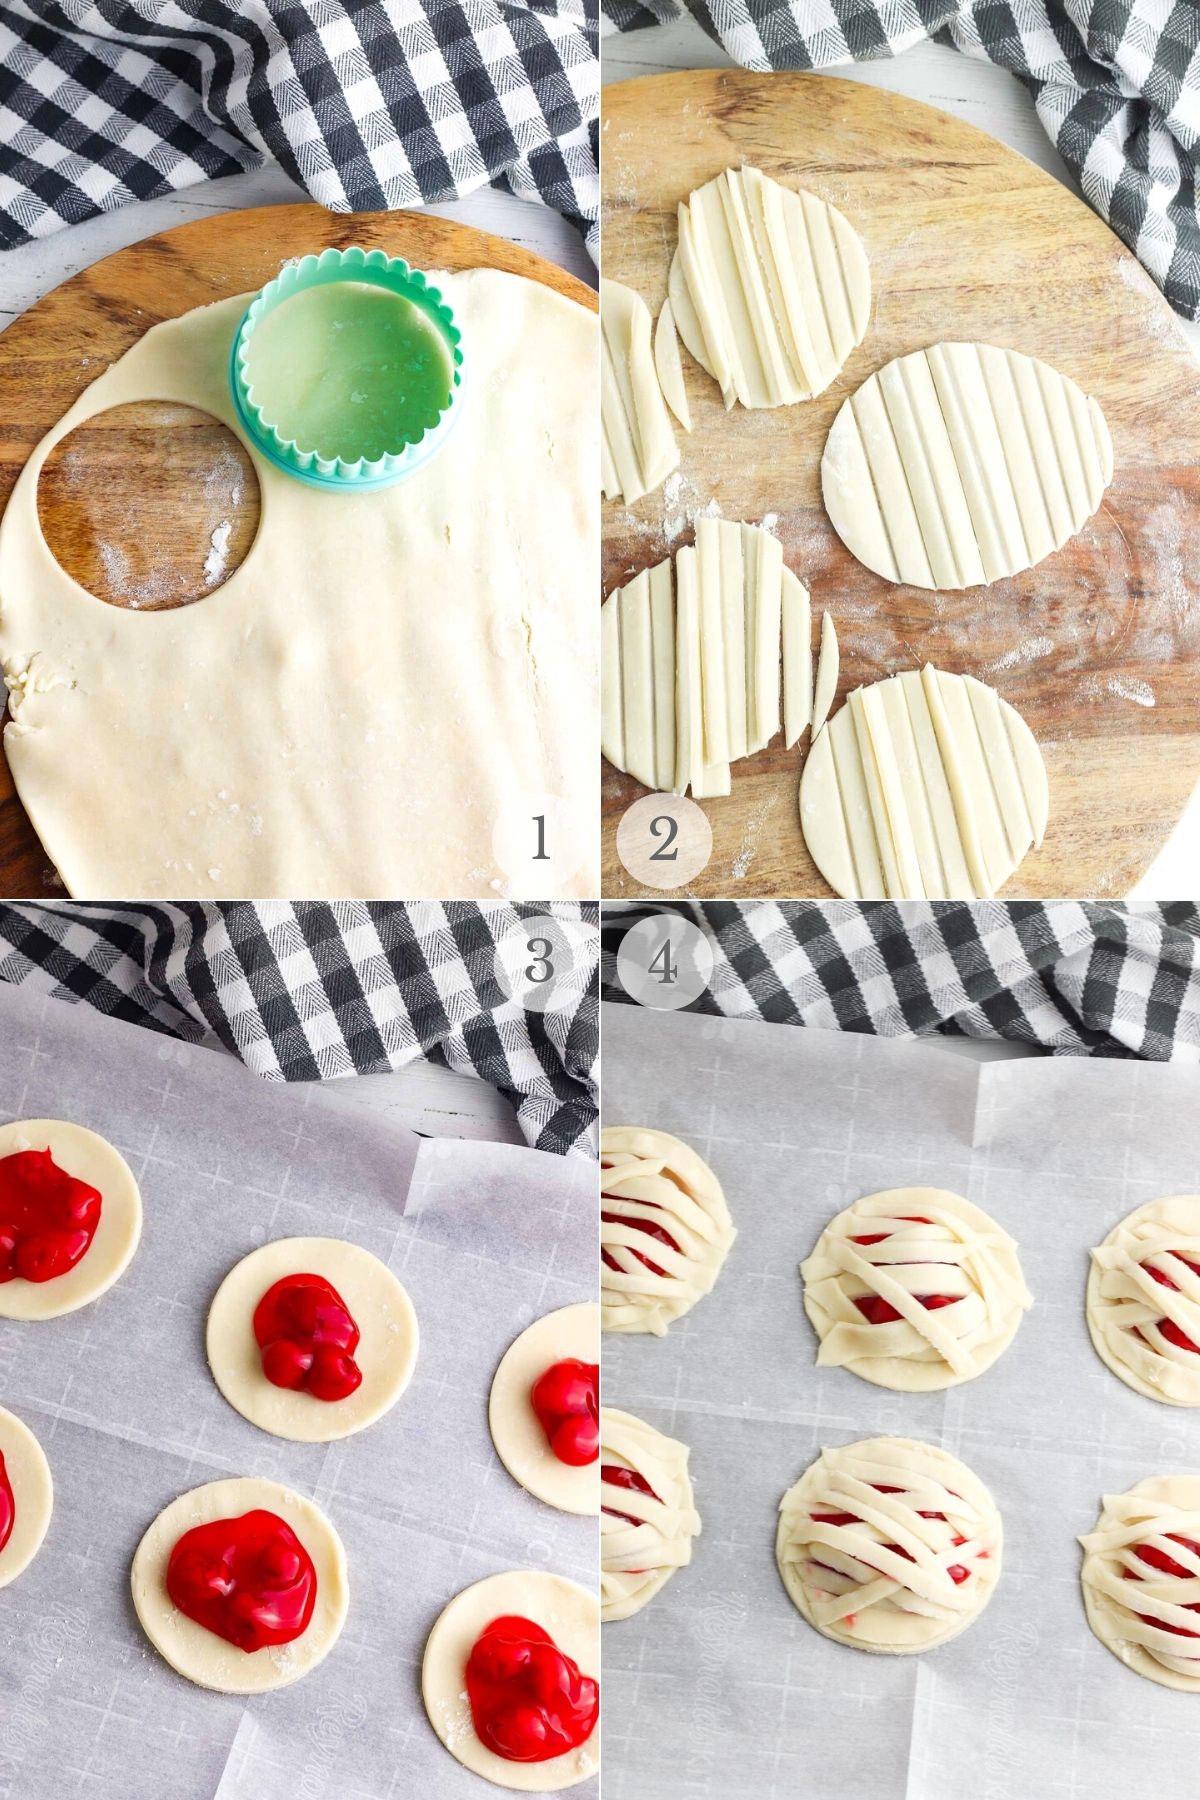 mummy hand pies recipes steps 1-4